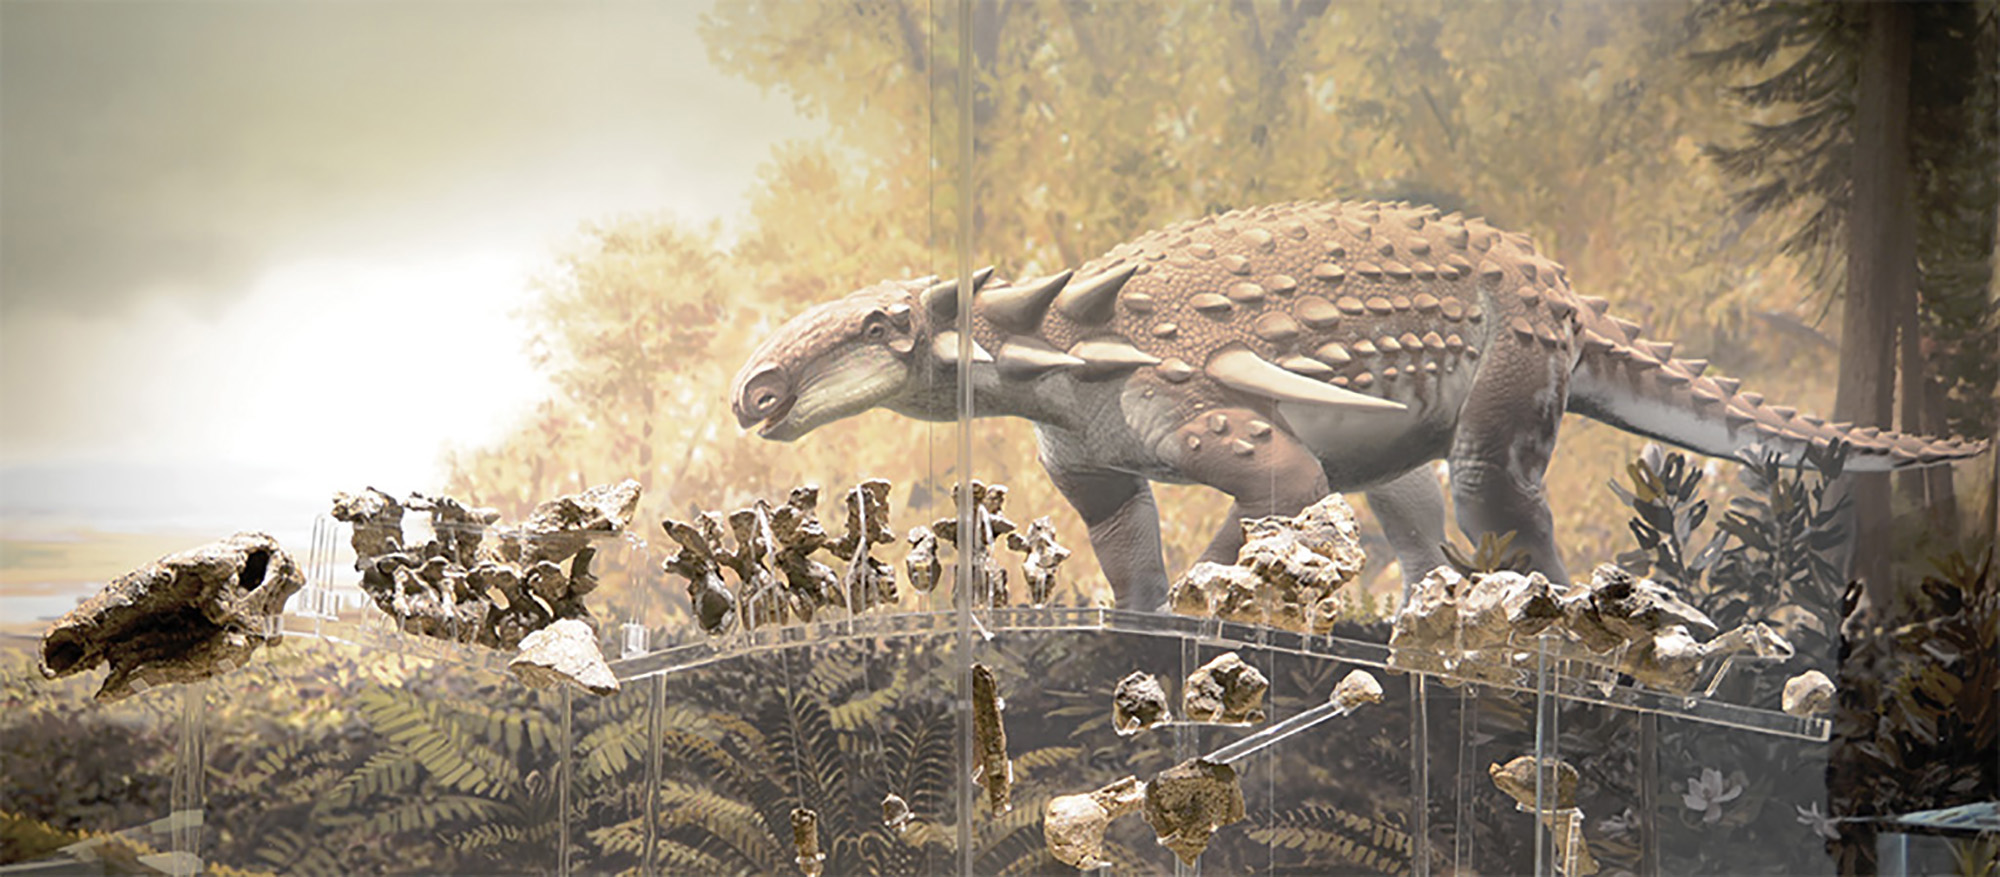 Silvisaurus exhibit at the KU Natural History Museum.